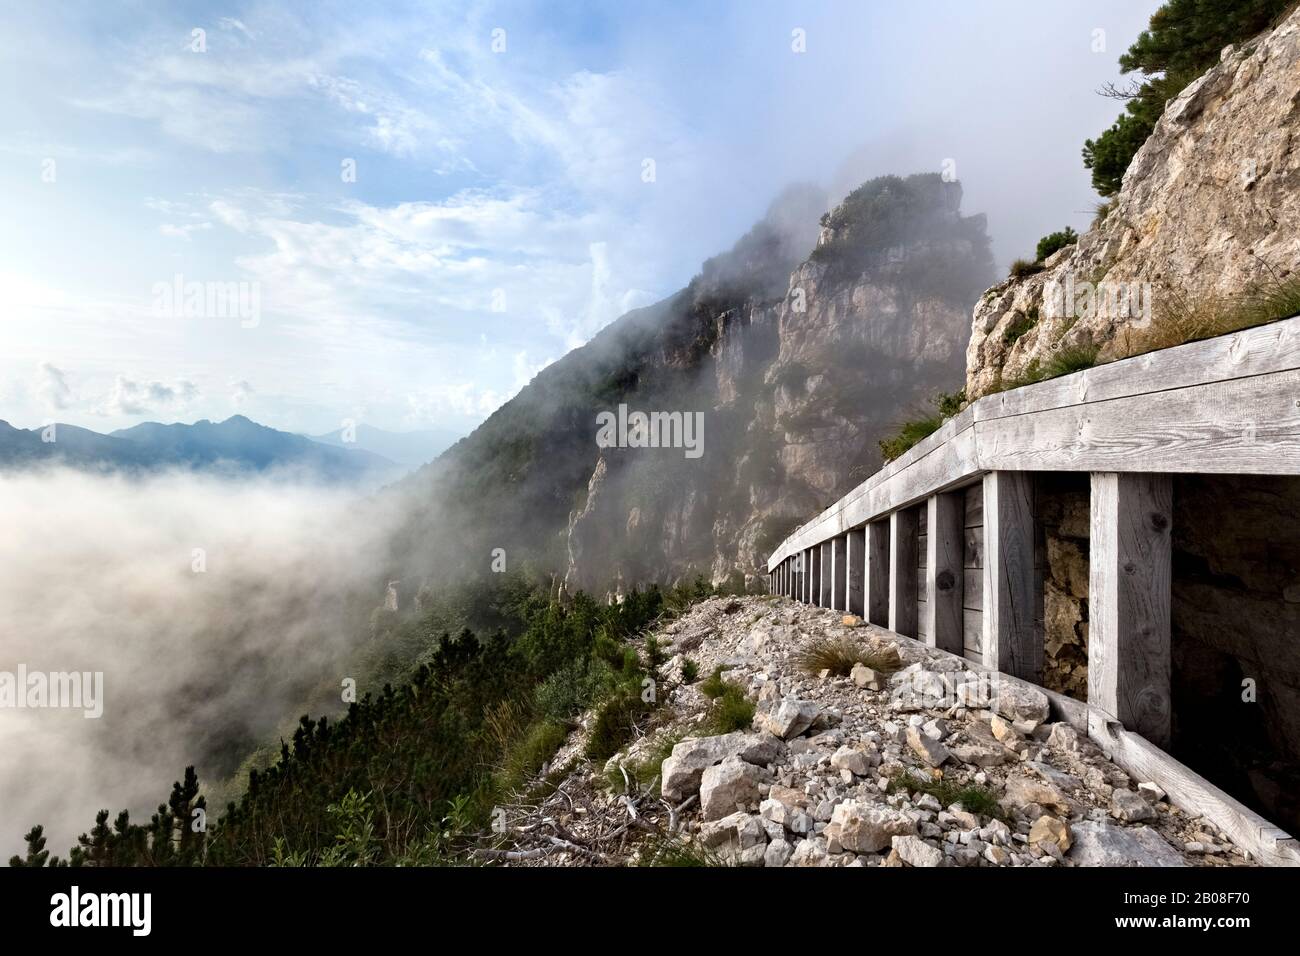 Italian trench of the Great War at the top of Mount La Sisilla. Piccole Dolomiti, Recoaro Terme, Vicenza province, Veneto, Italy, Europe. Stock Photo